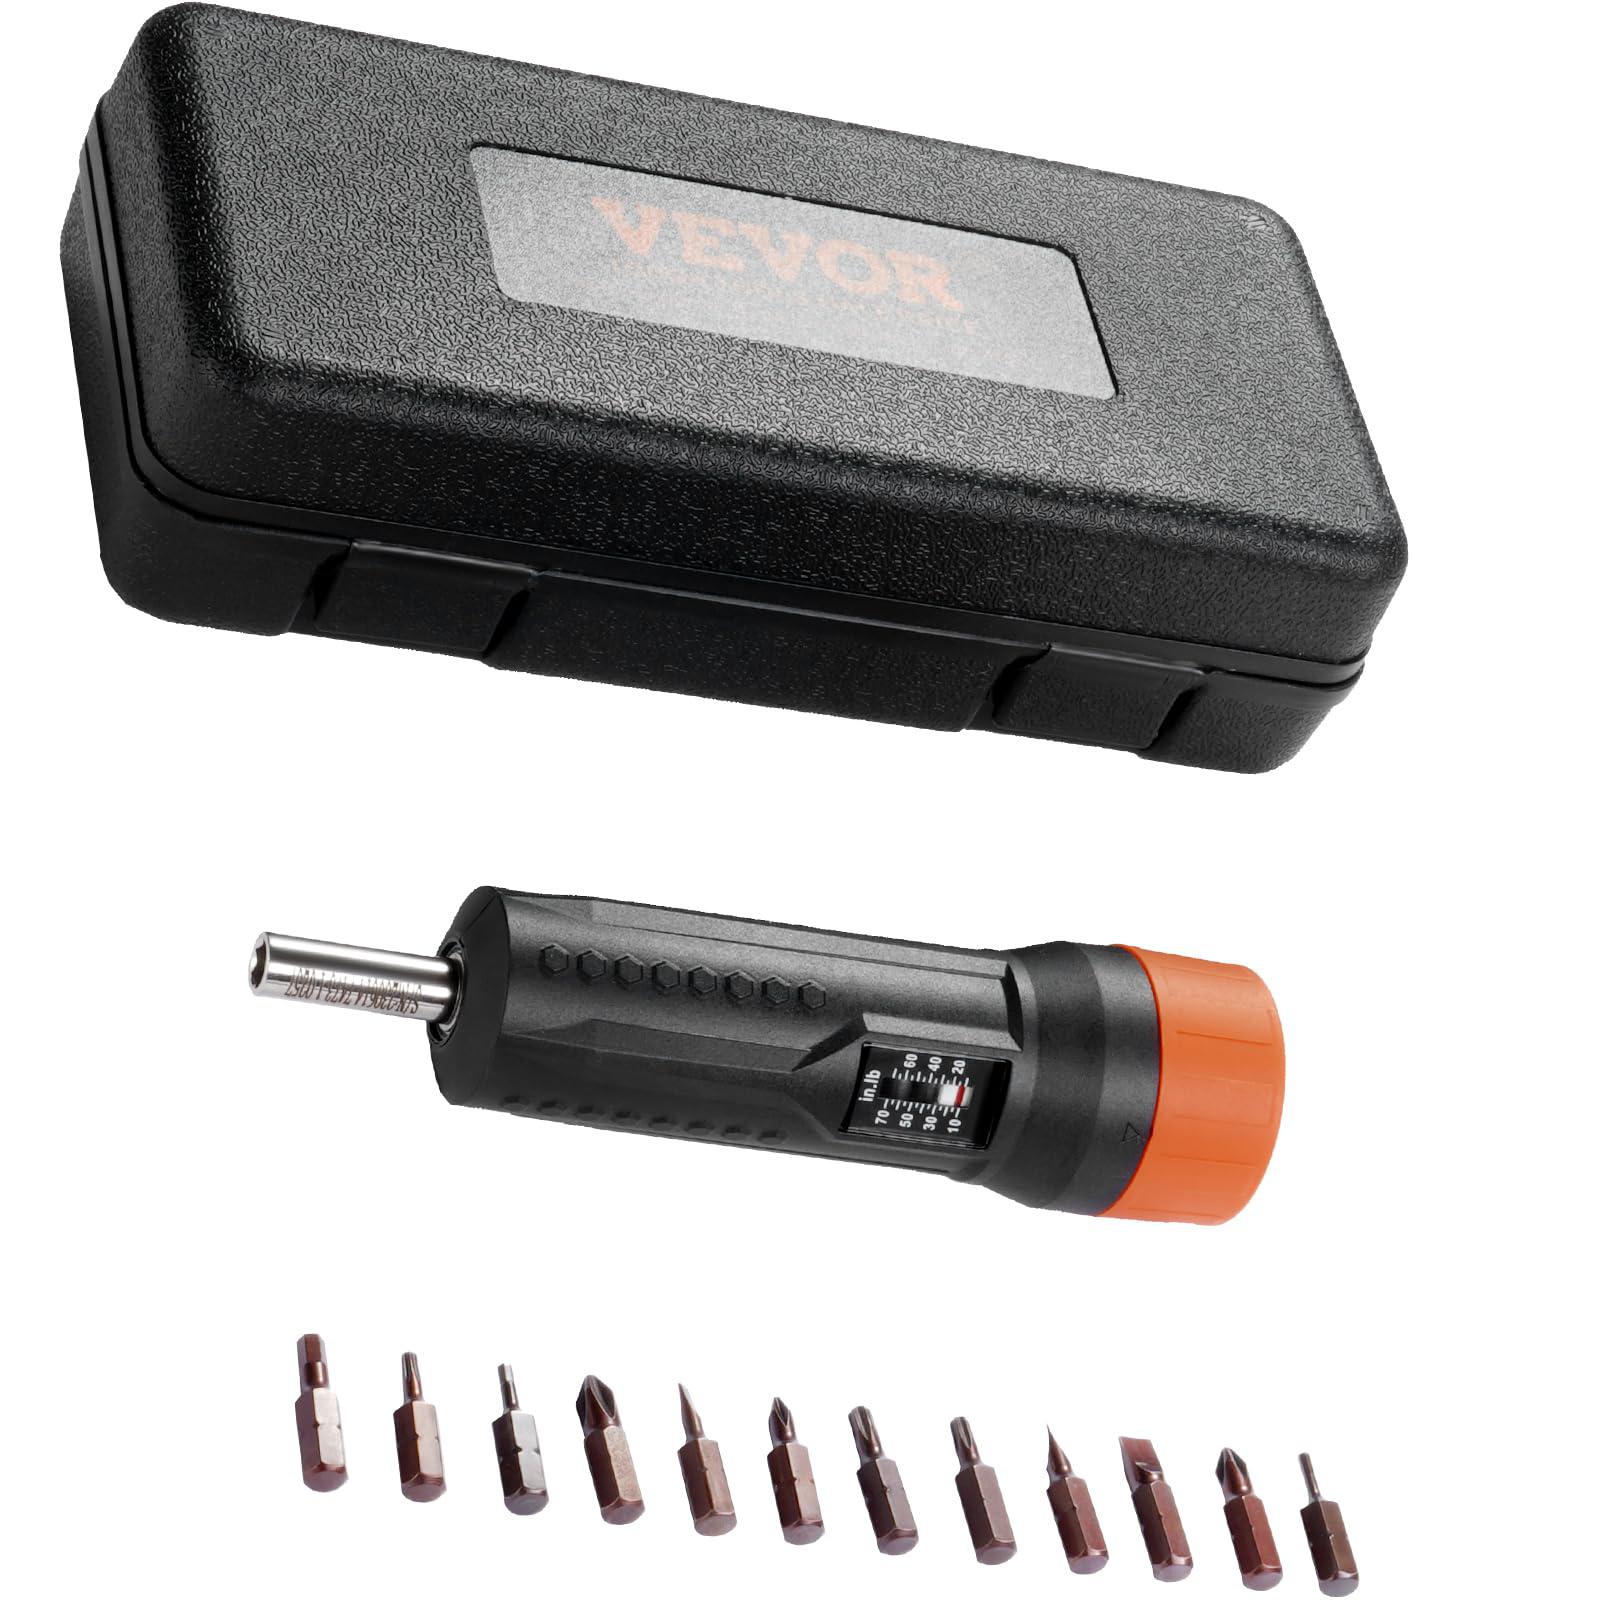 vevor torque screwdriver, 1/4" drive screwdriver torque wrench, driver bits set with view window, 10-70 in-lbs torque range, 